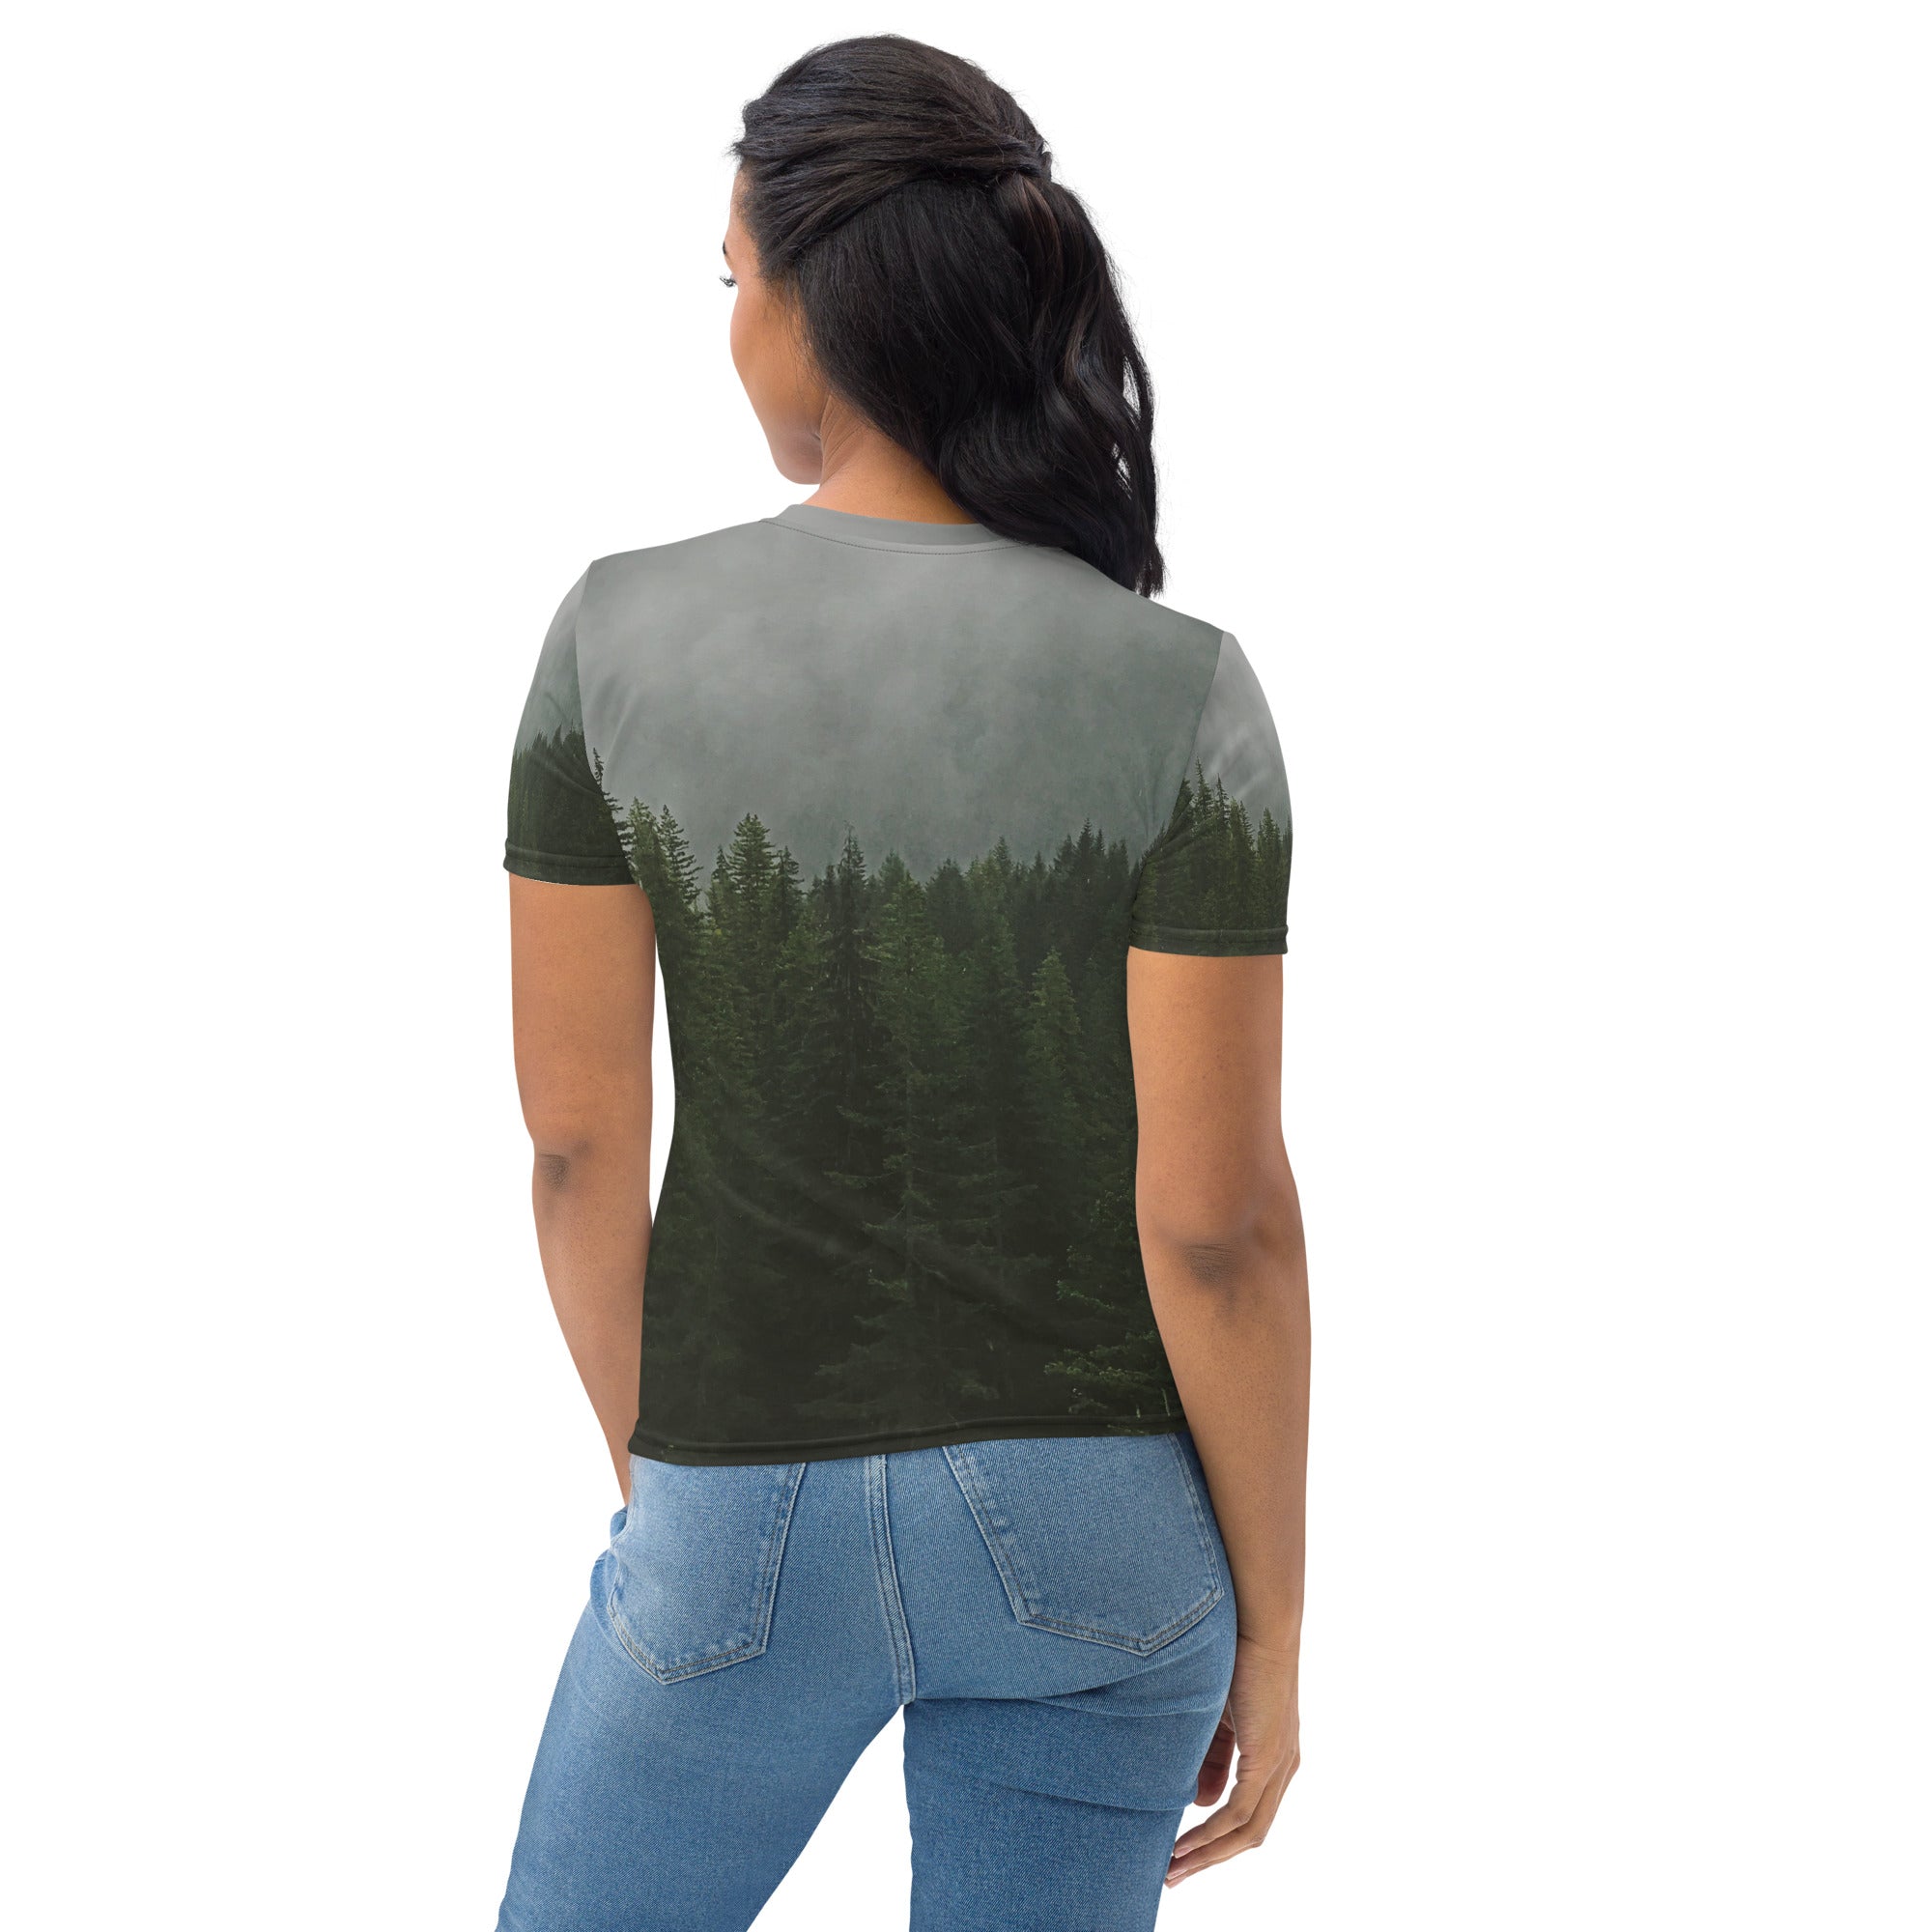 Misty Trees Shirt, Women